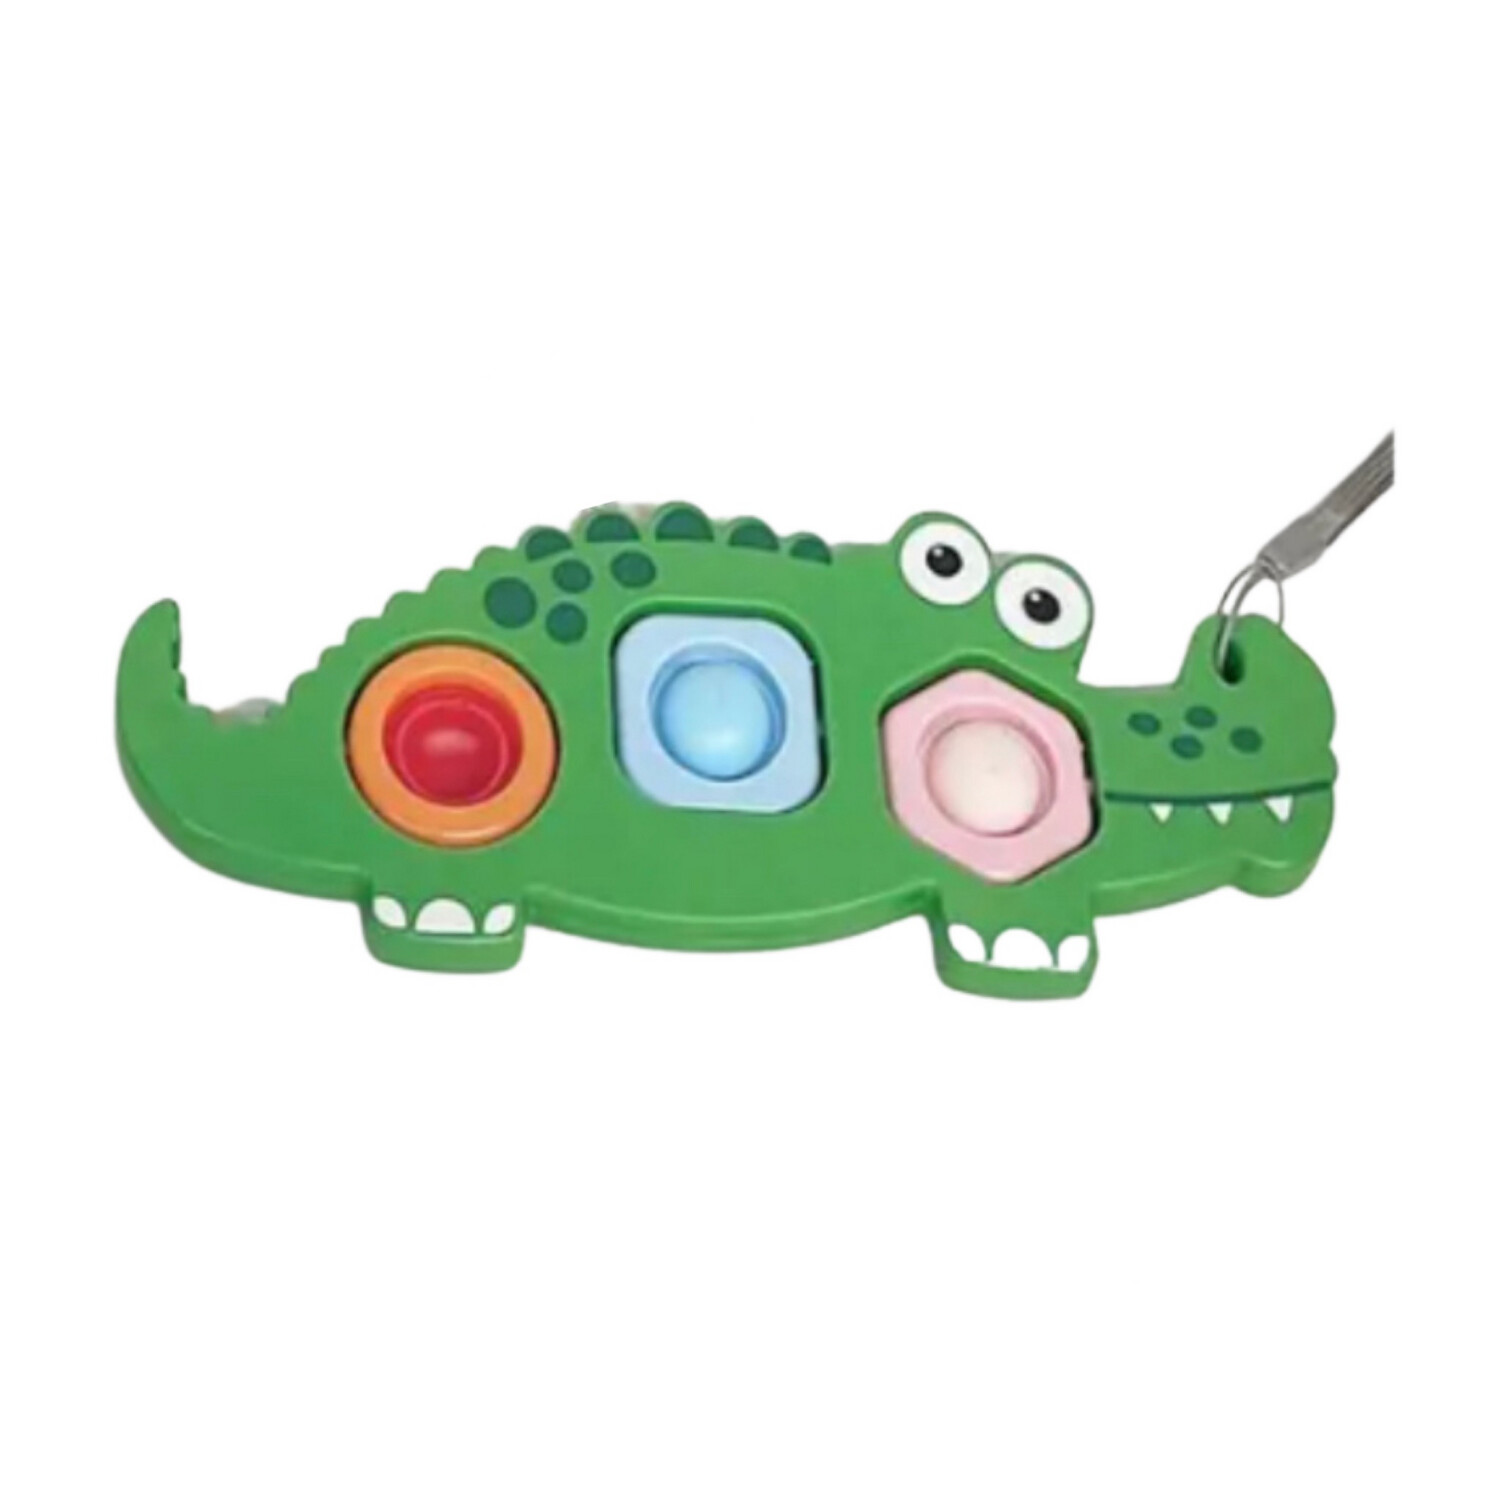 Crocodile Push Pop Fidget Toy